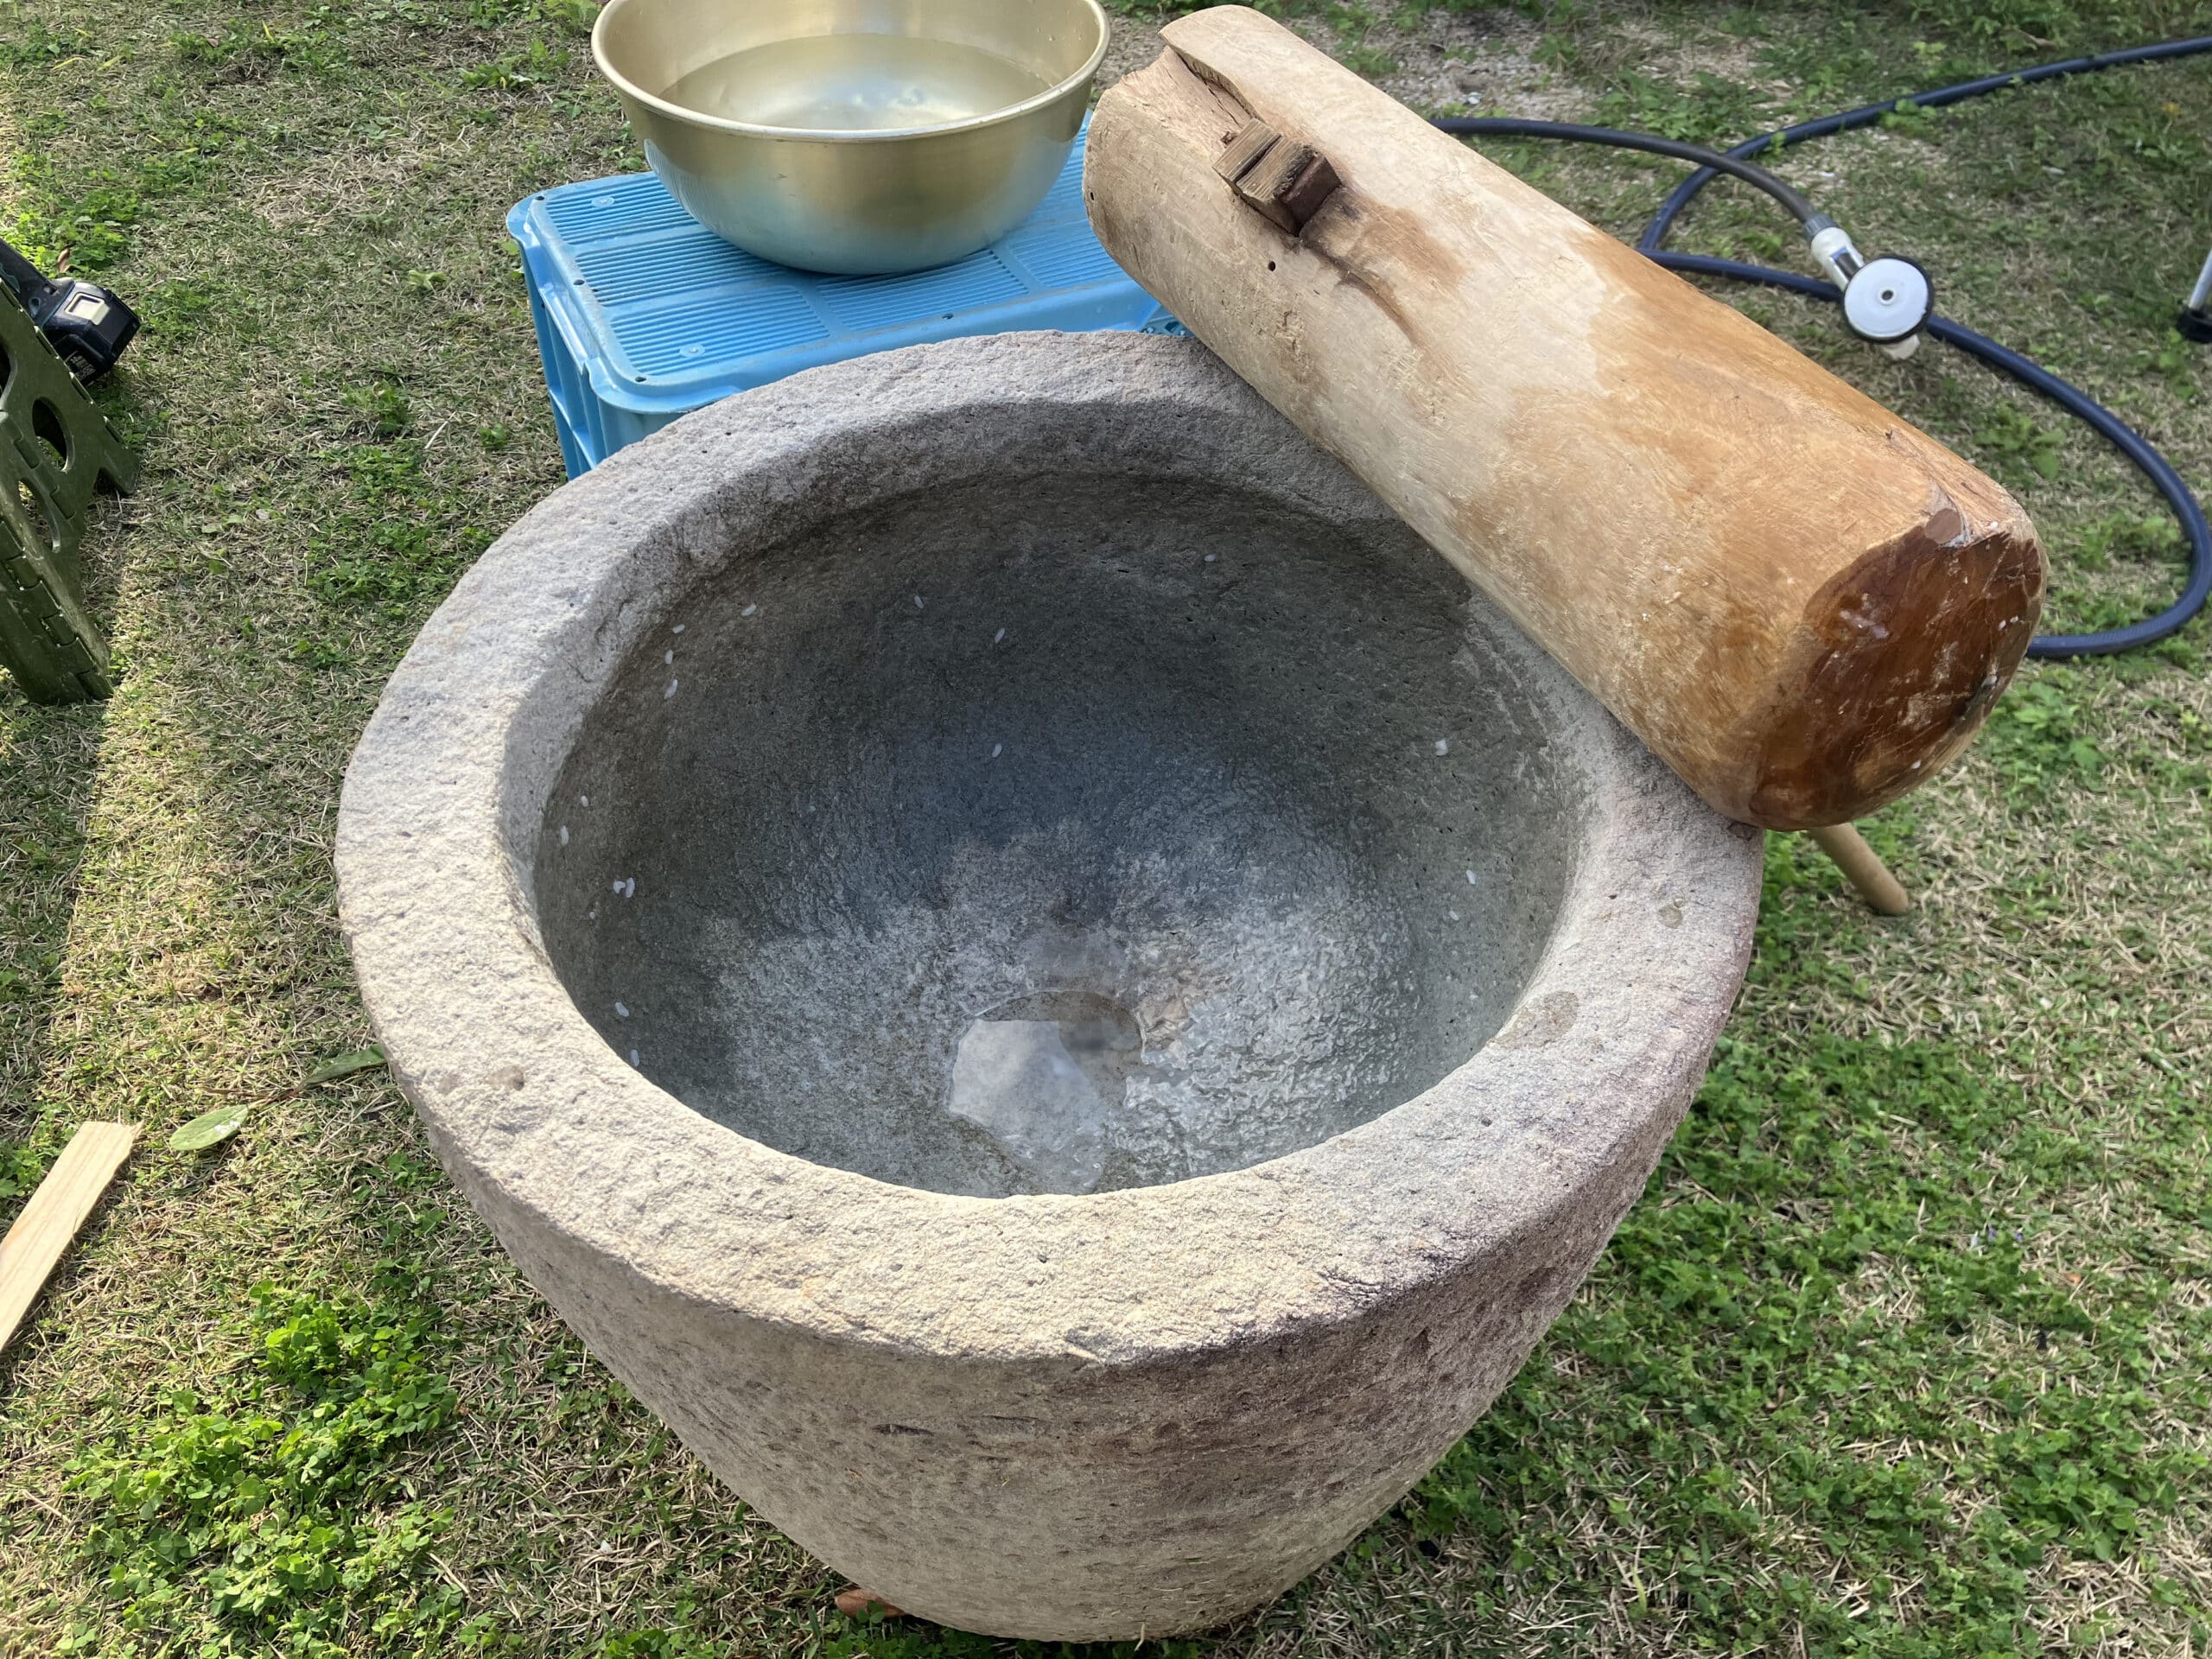 The mortar and pestle used in mochitsuki on Amami Oshima.